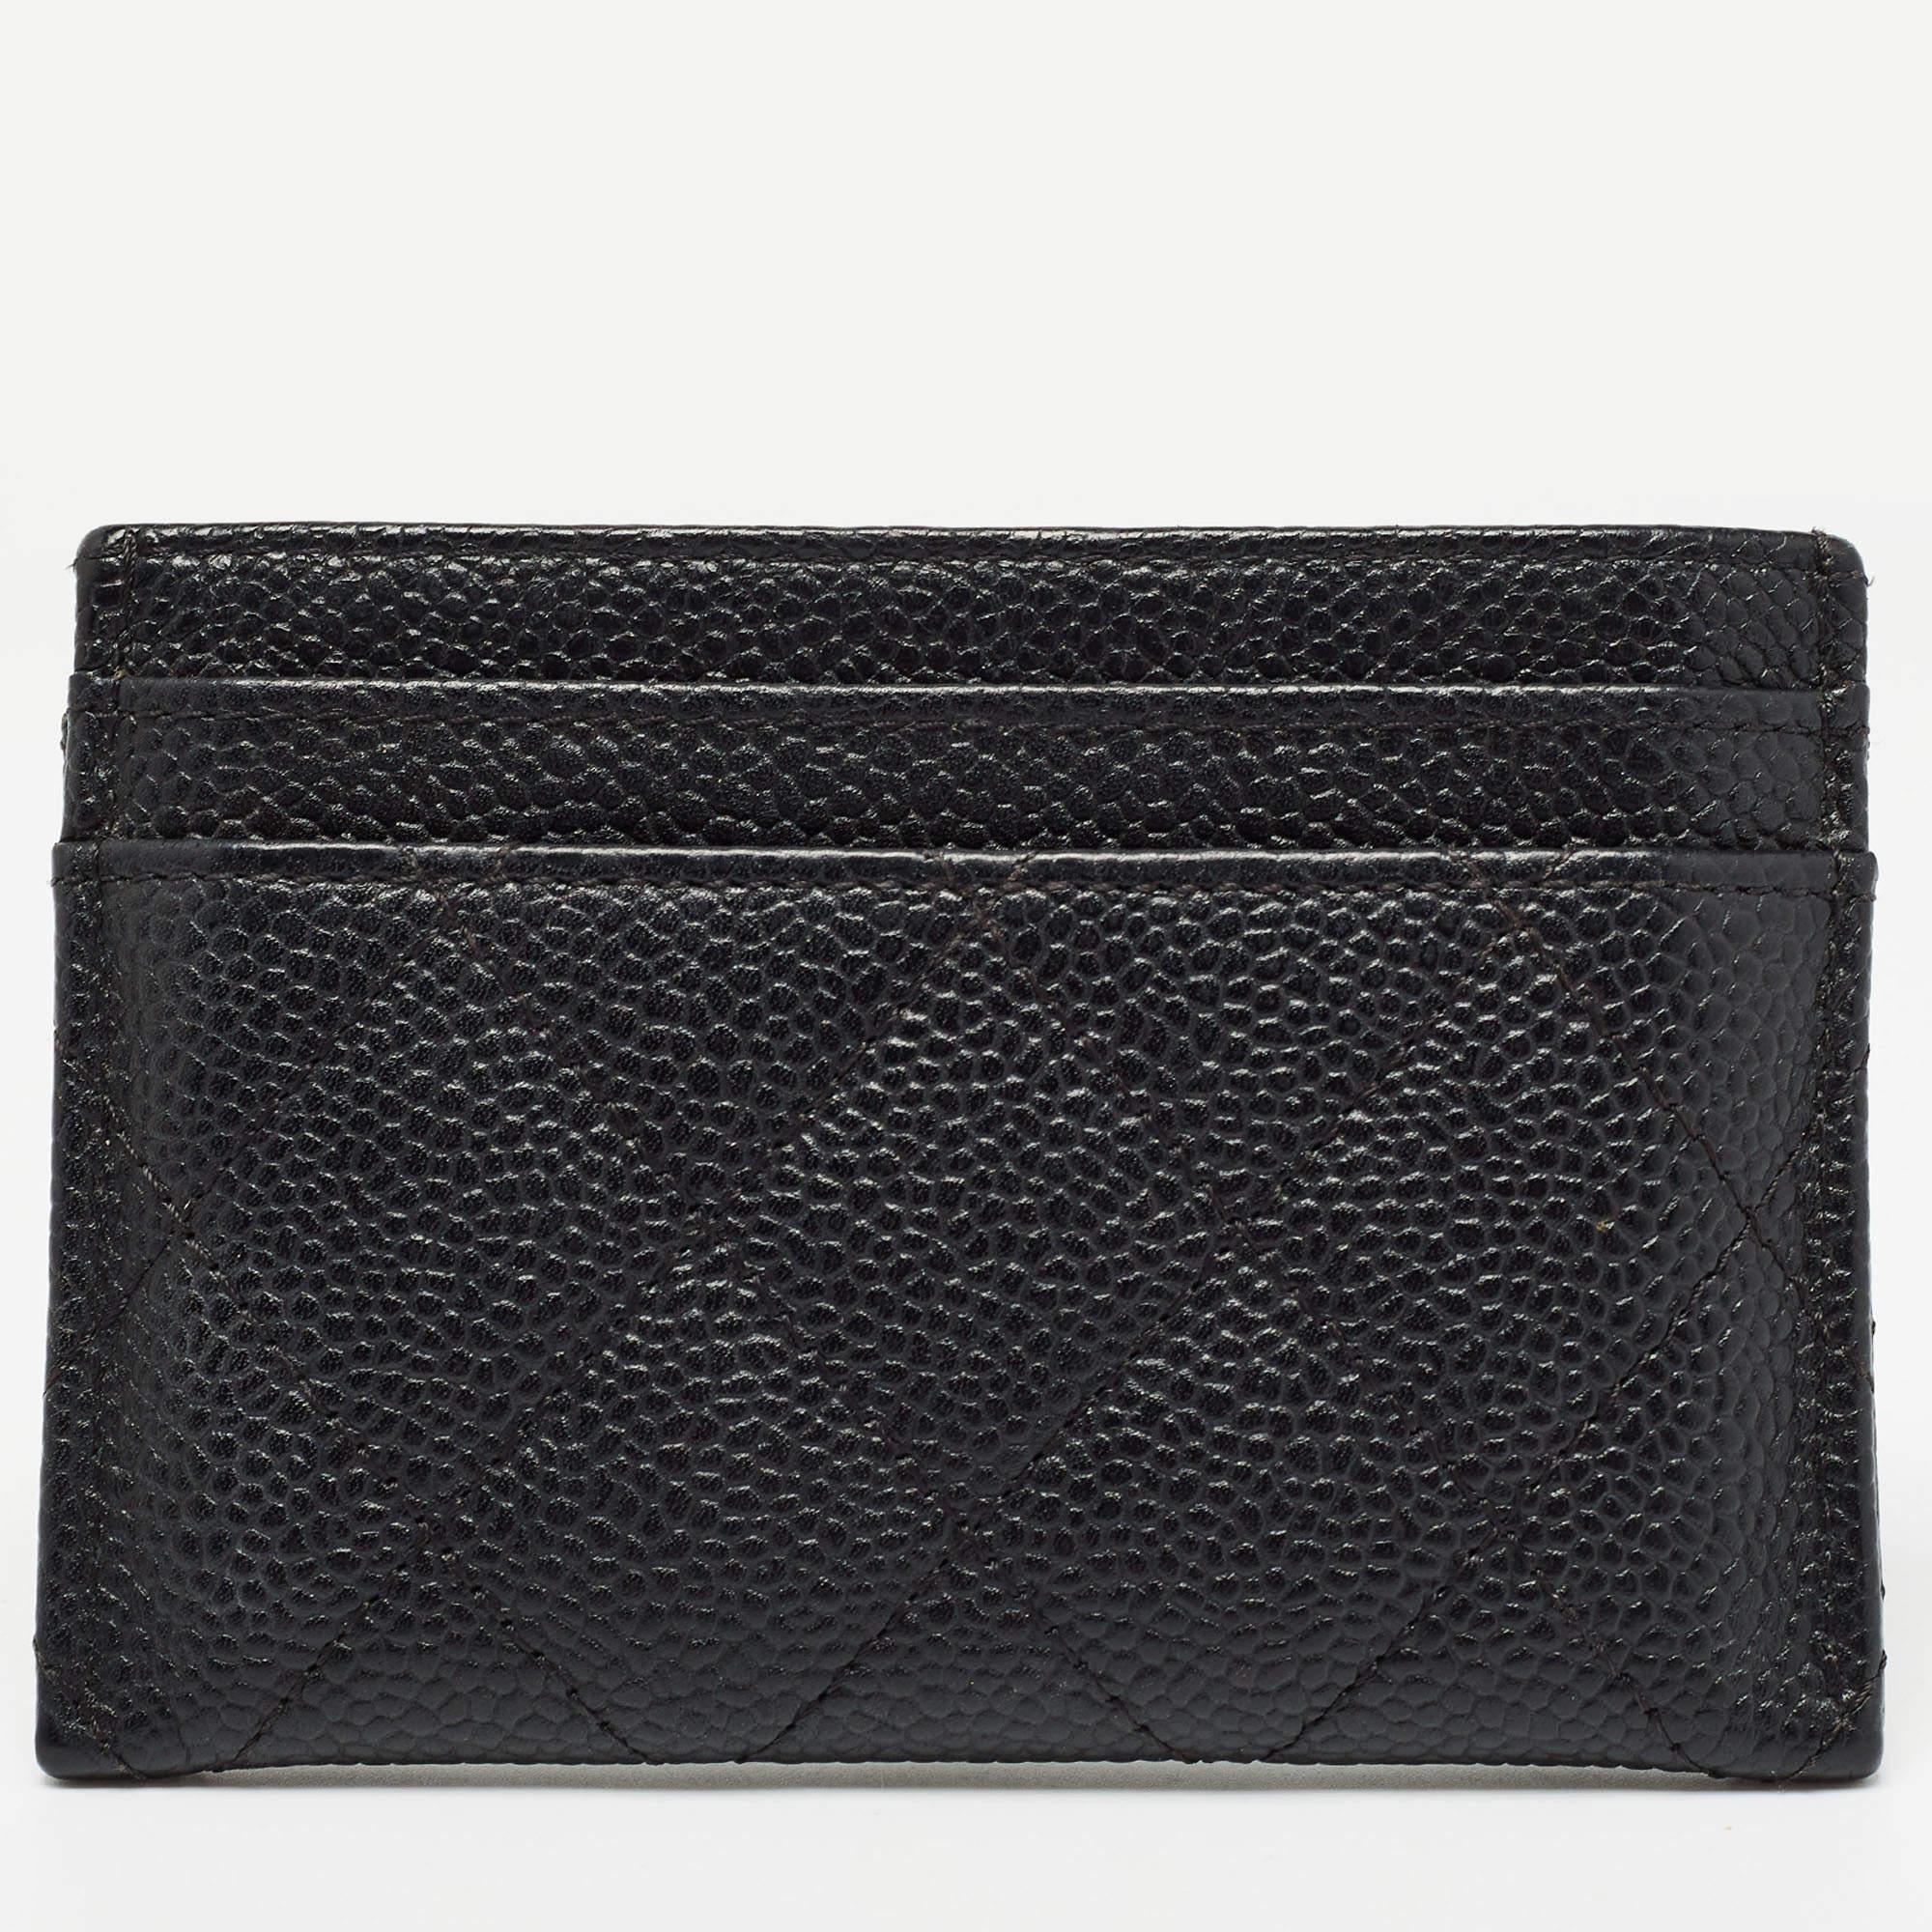 Chanel Black Caviar Leather CC Filigree Card Holder For Sale 1